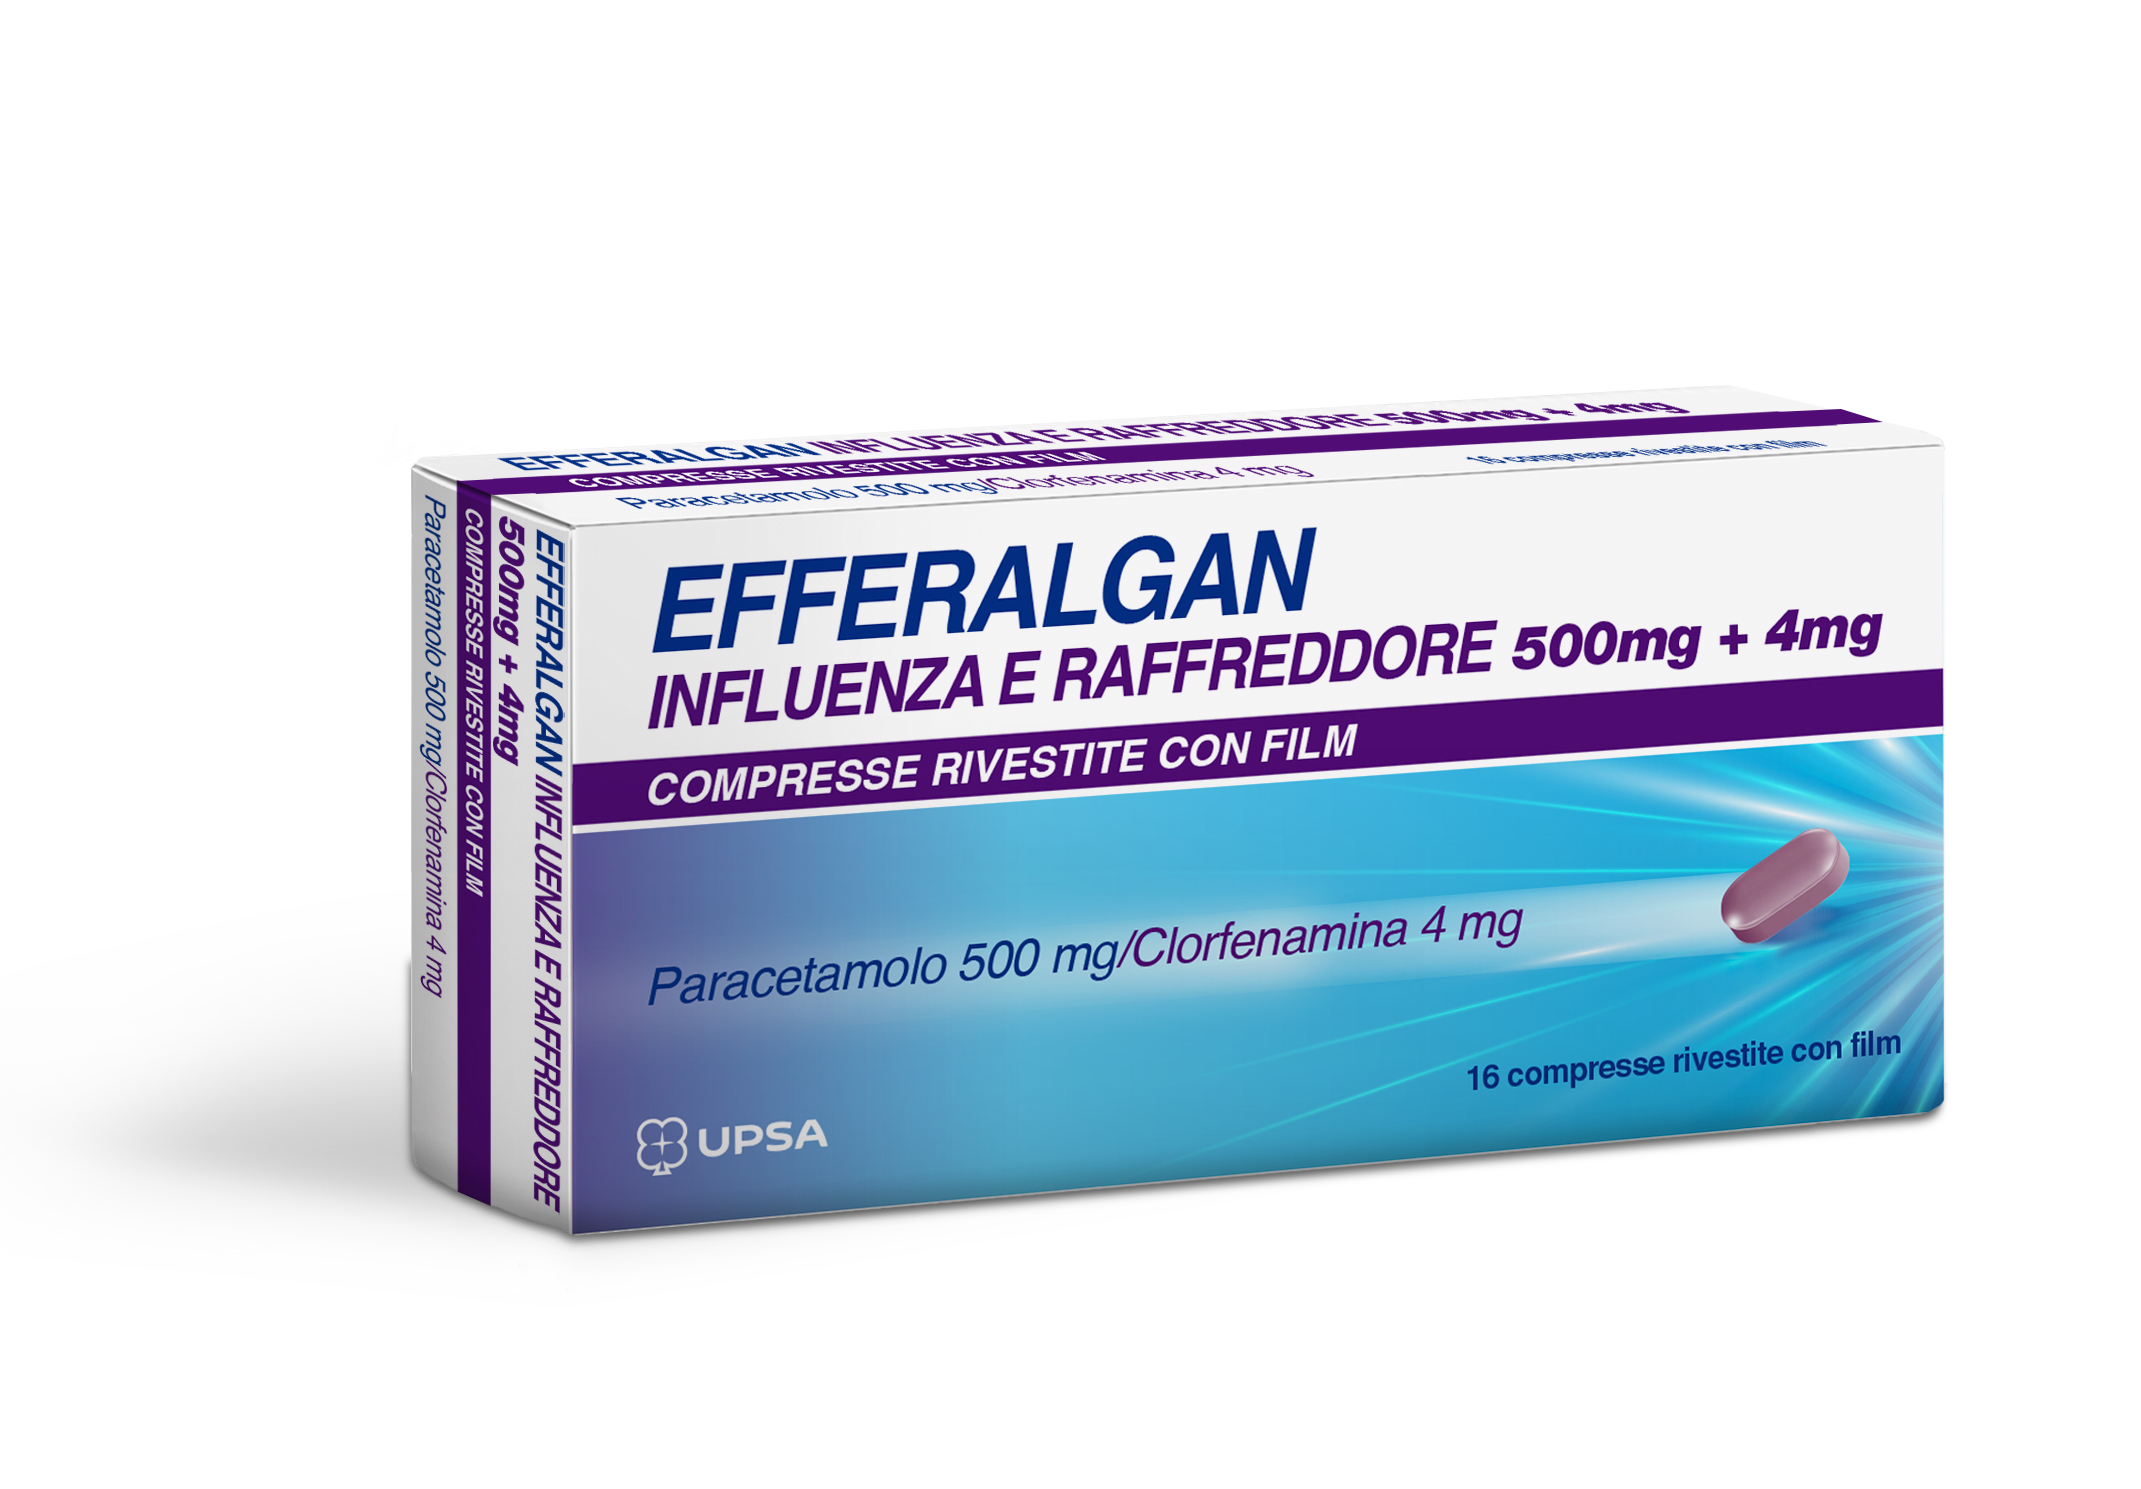 Image of Efferalgan Inf&raf.500+4 16cpr